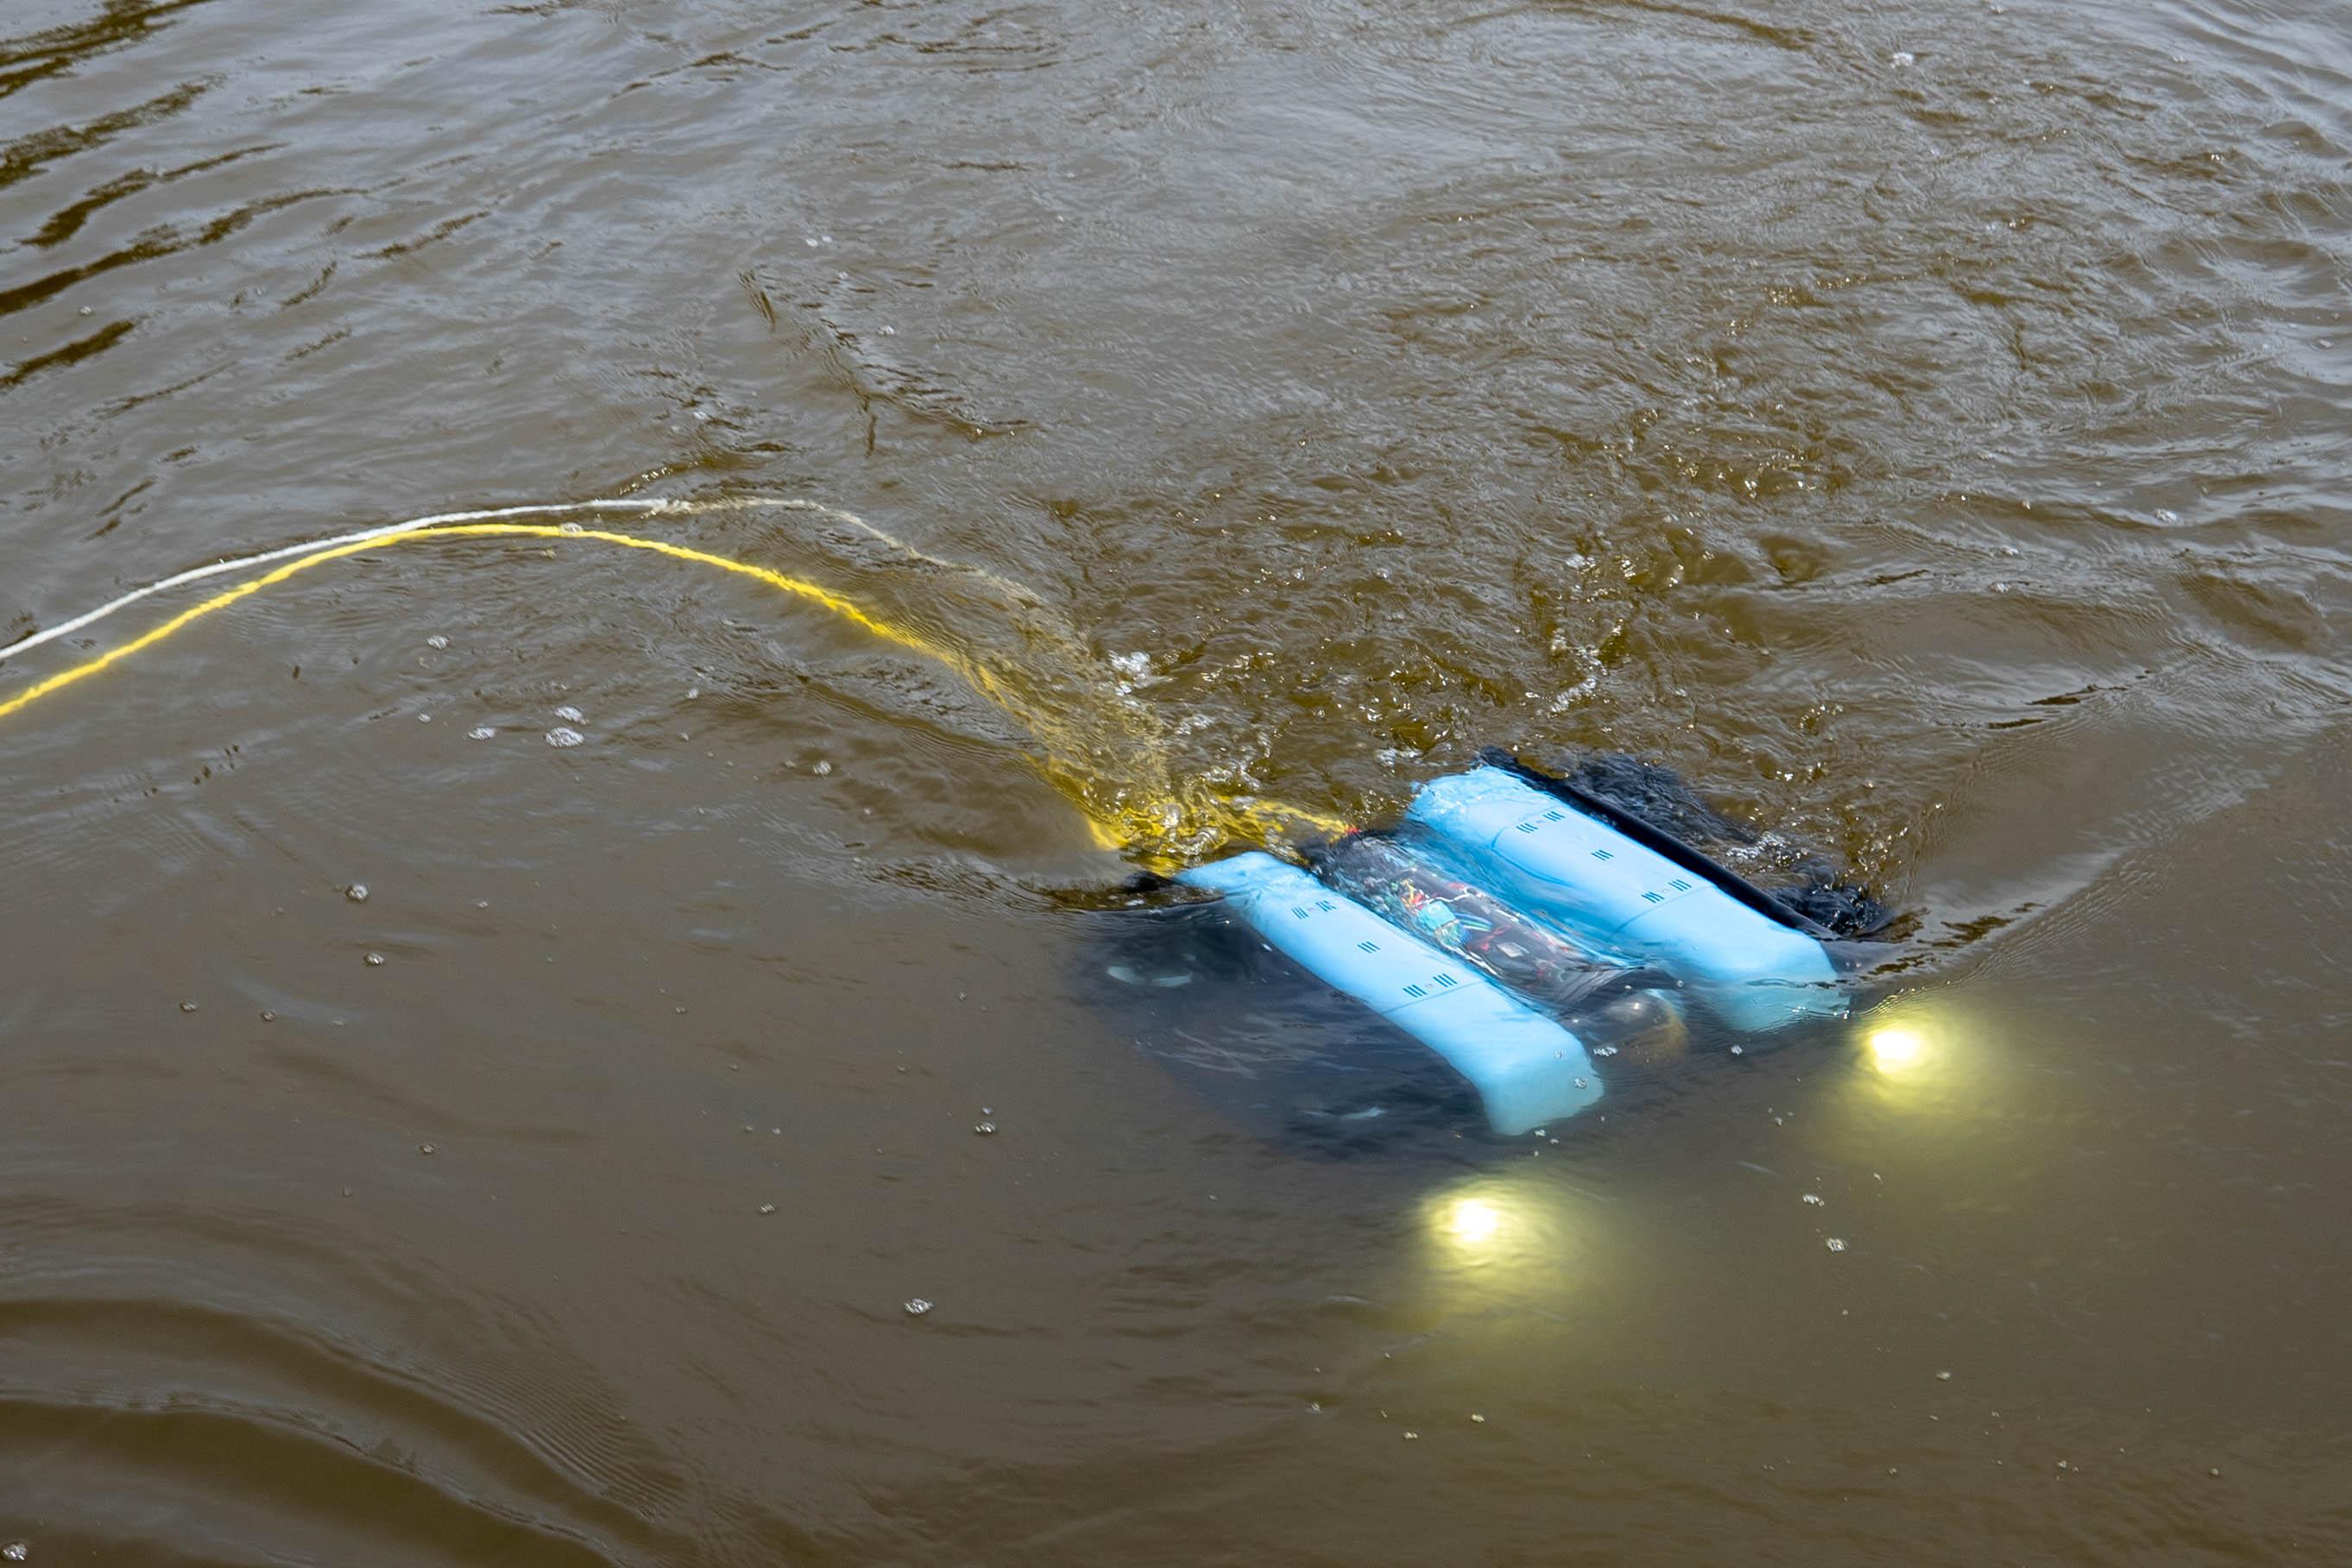 Underwater ROV in water